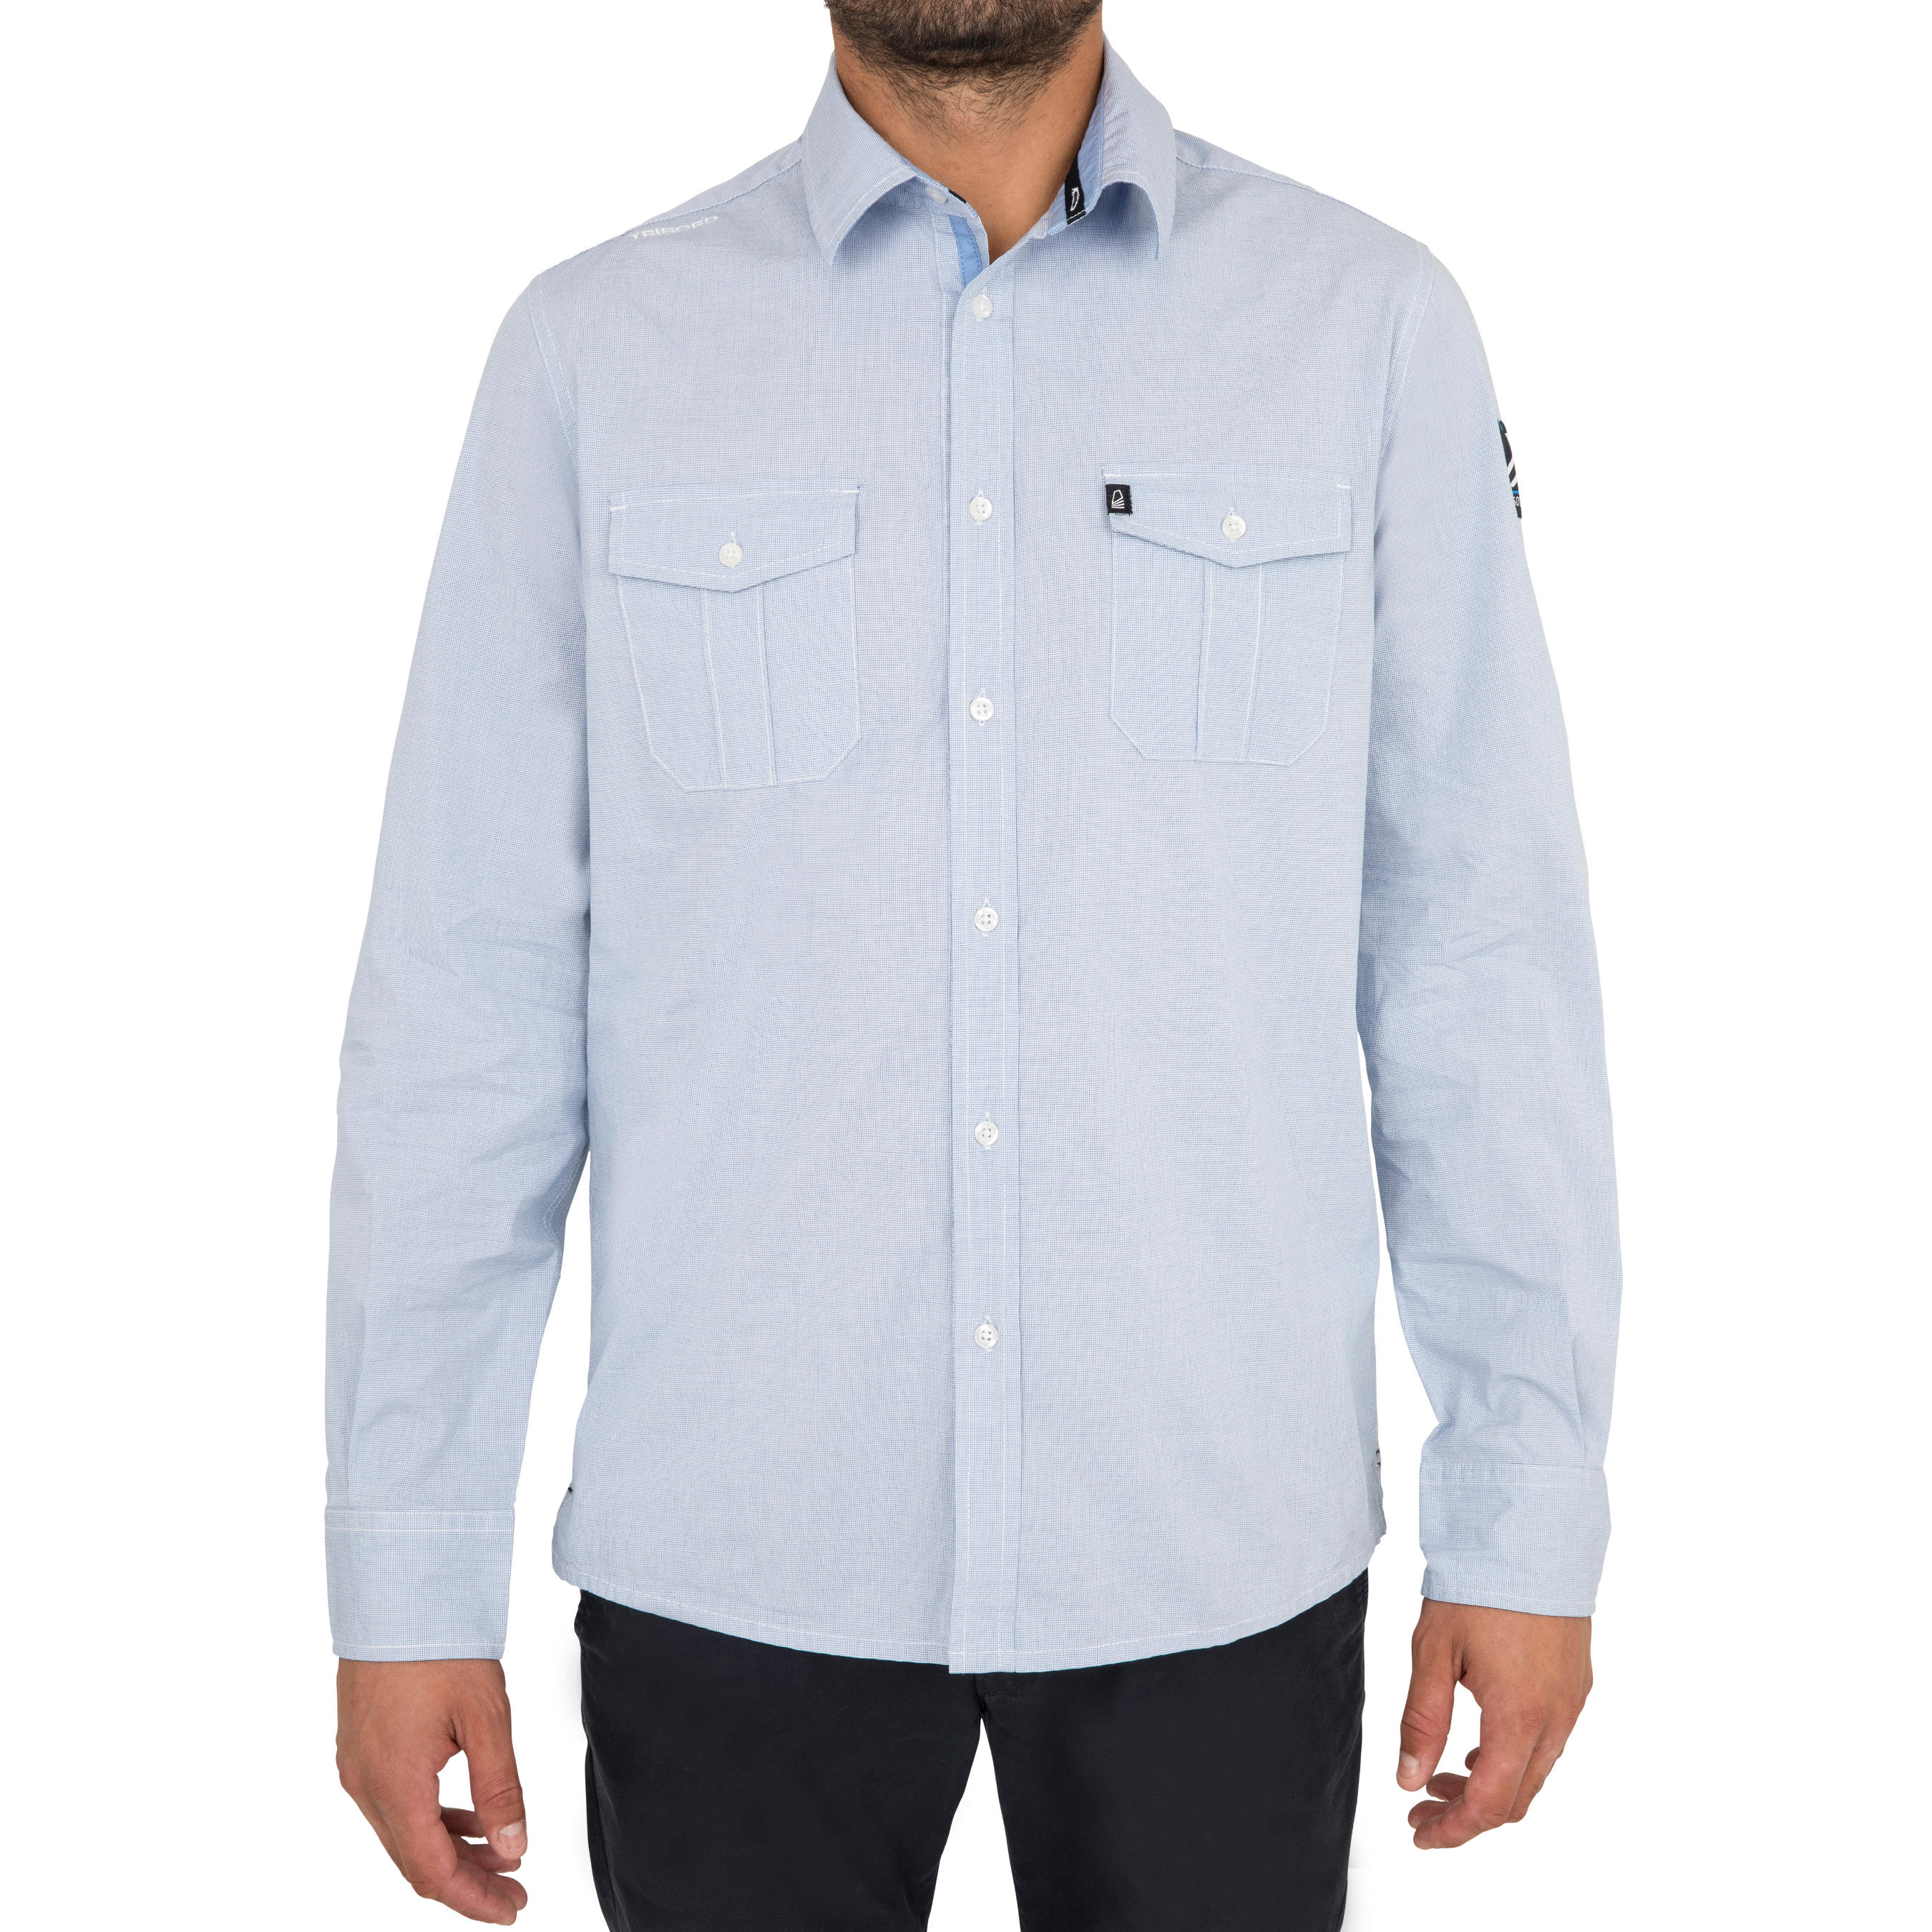 Men's sailing shirt 100 - blue 2/8